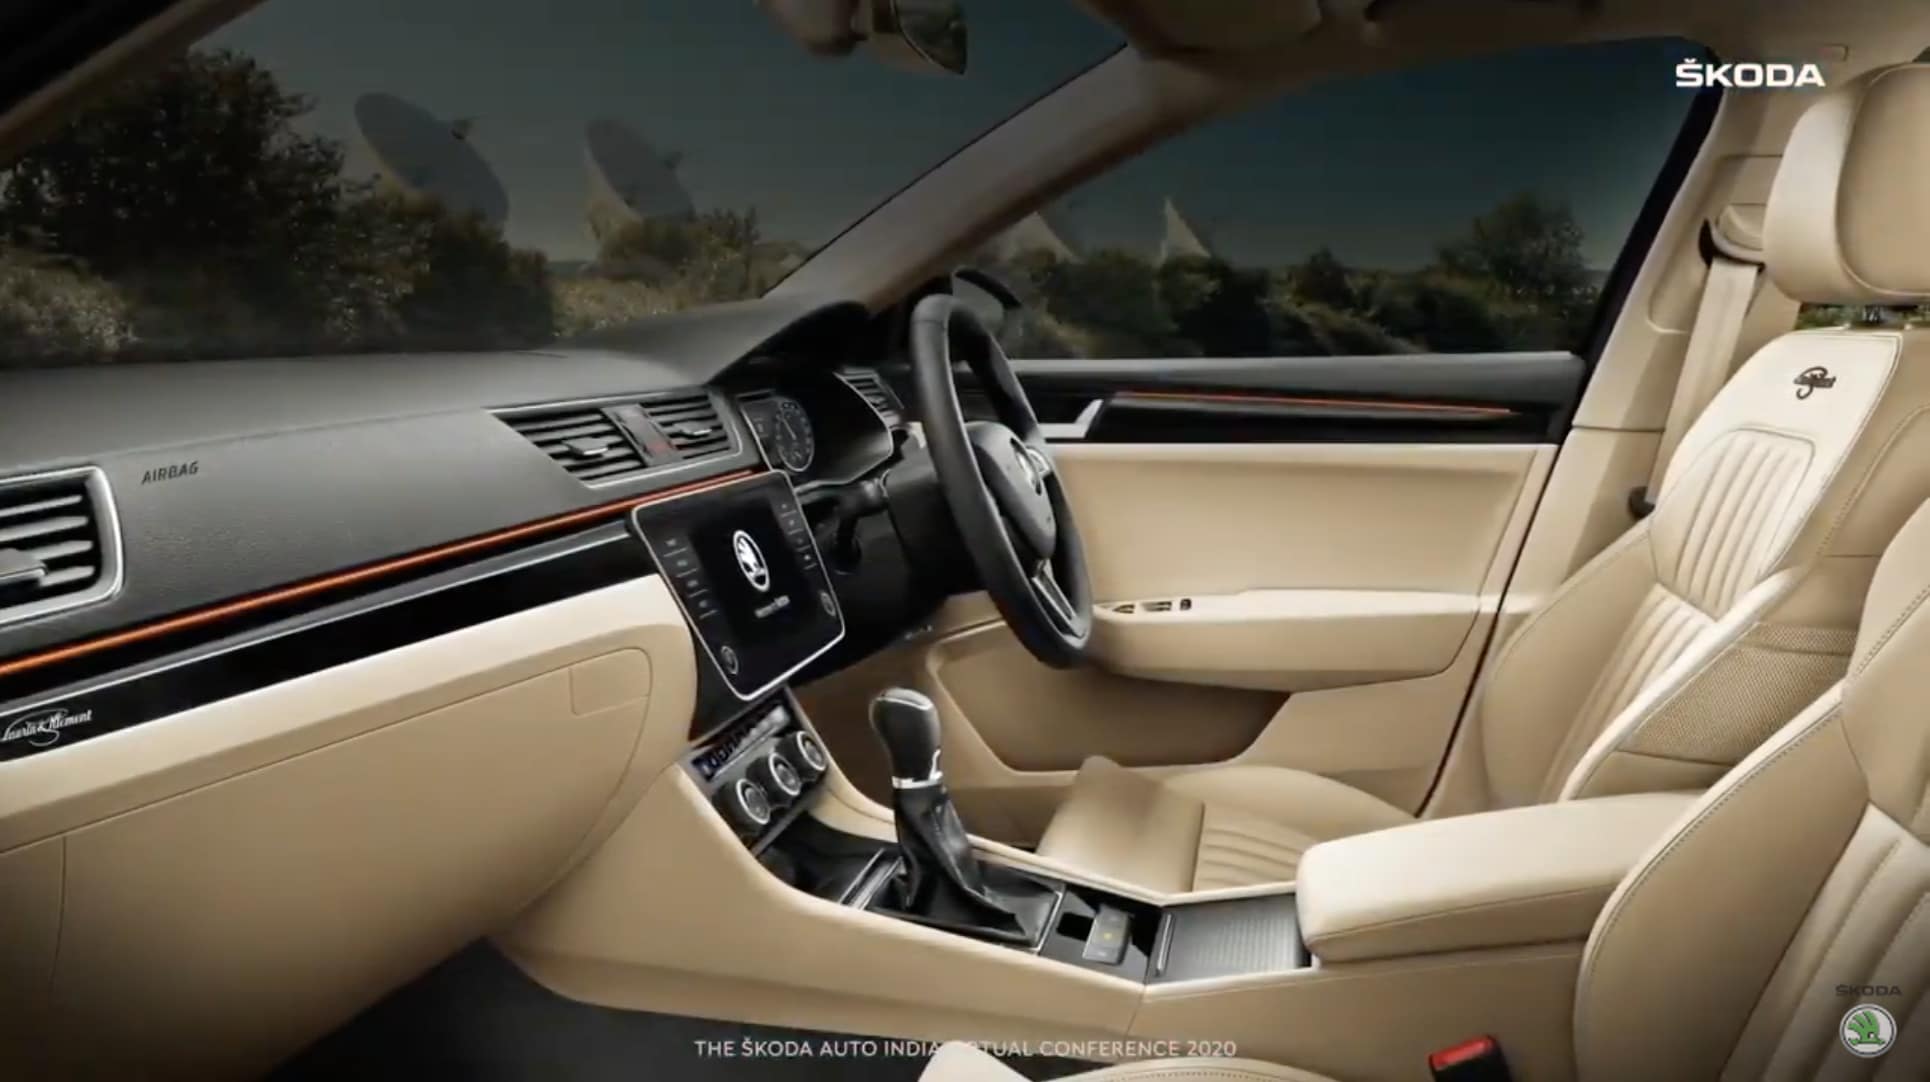 Interior of the new Skoda Superb sedan.